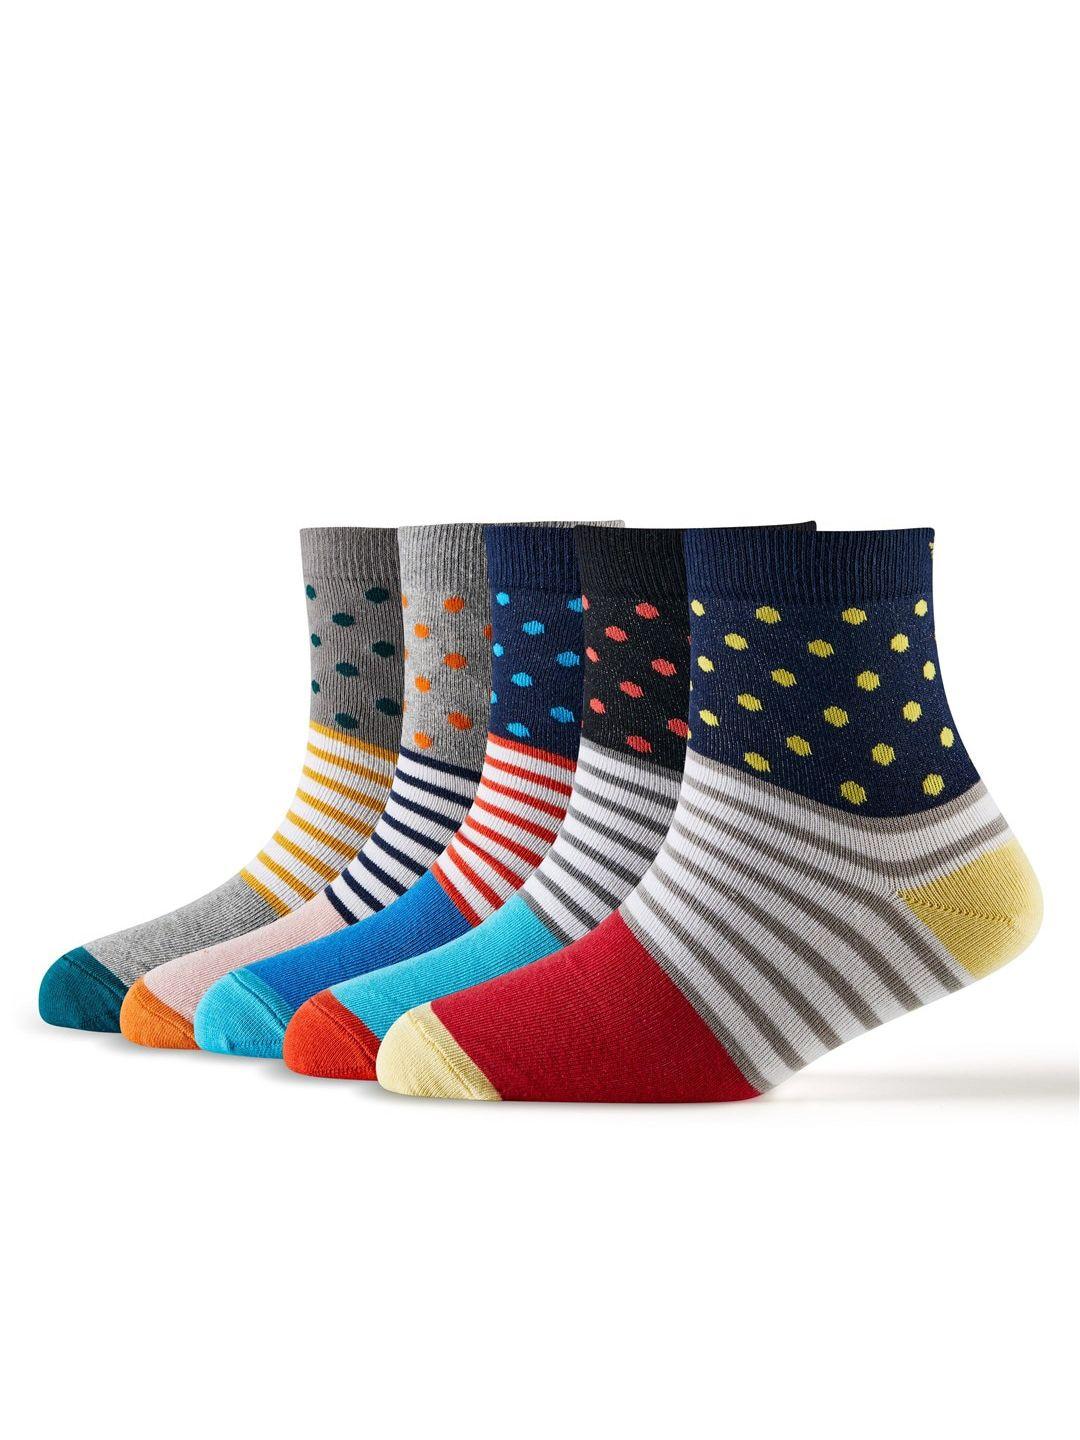 cotstyle men pack of 5 patterned ankle-length socks